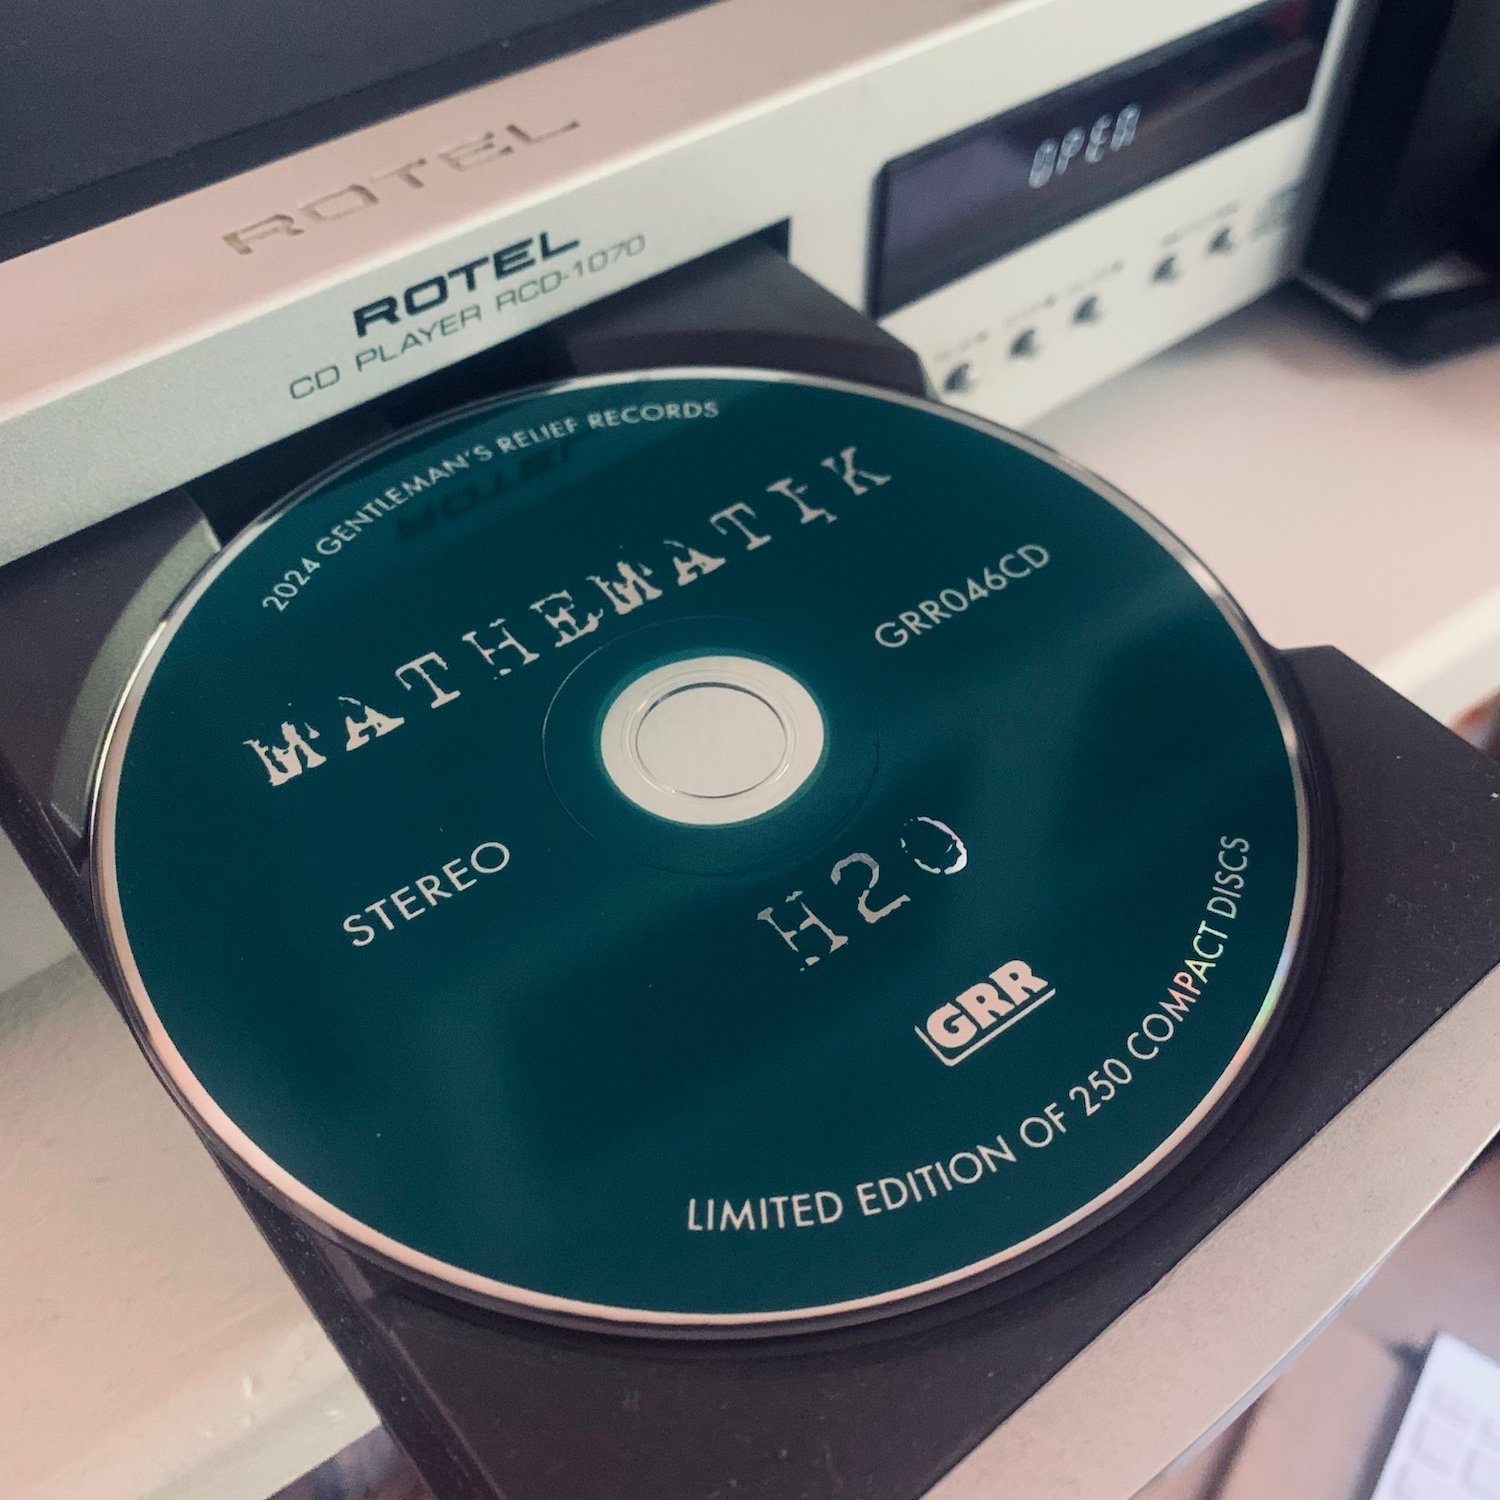 Image of Mathematik - H2O (CD) (Shipping now!)